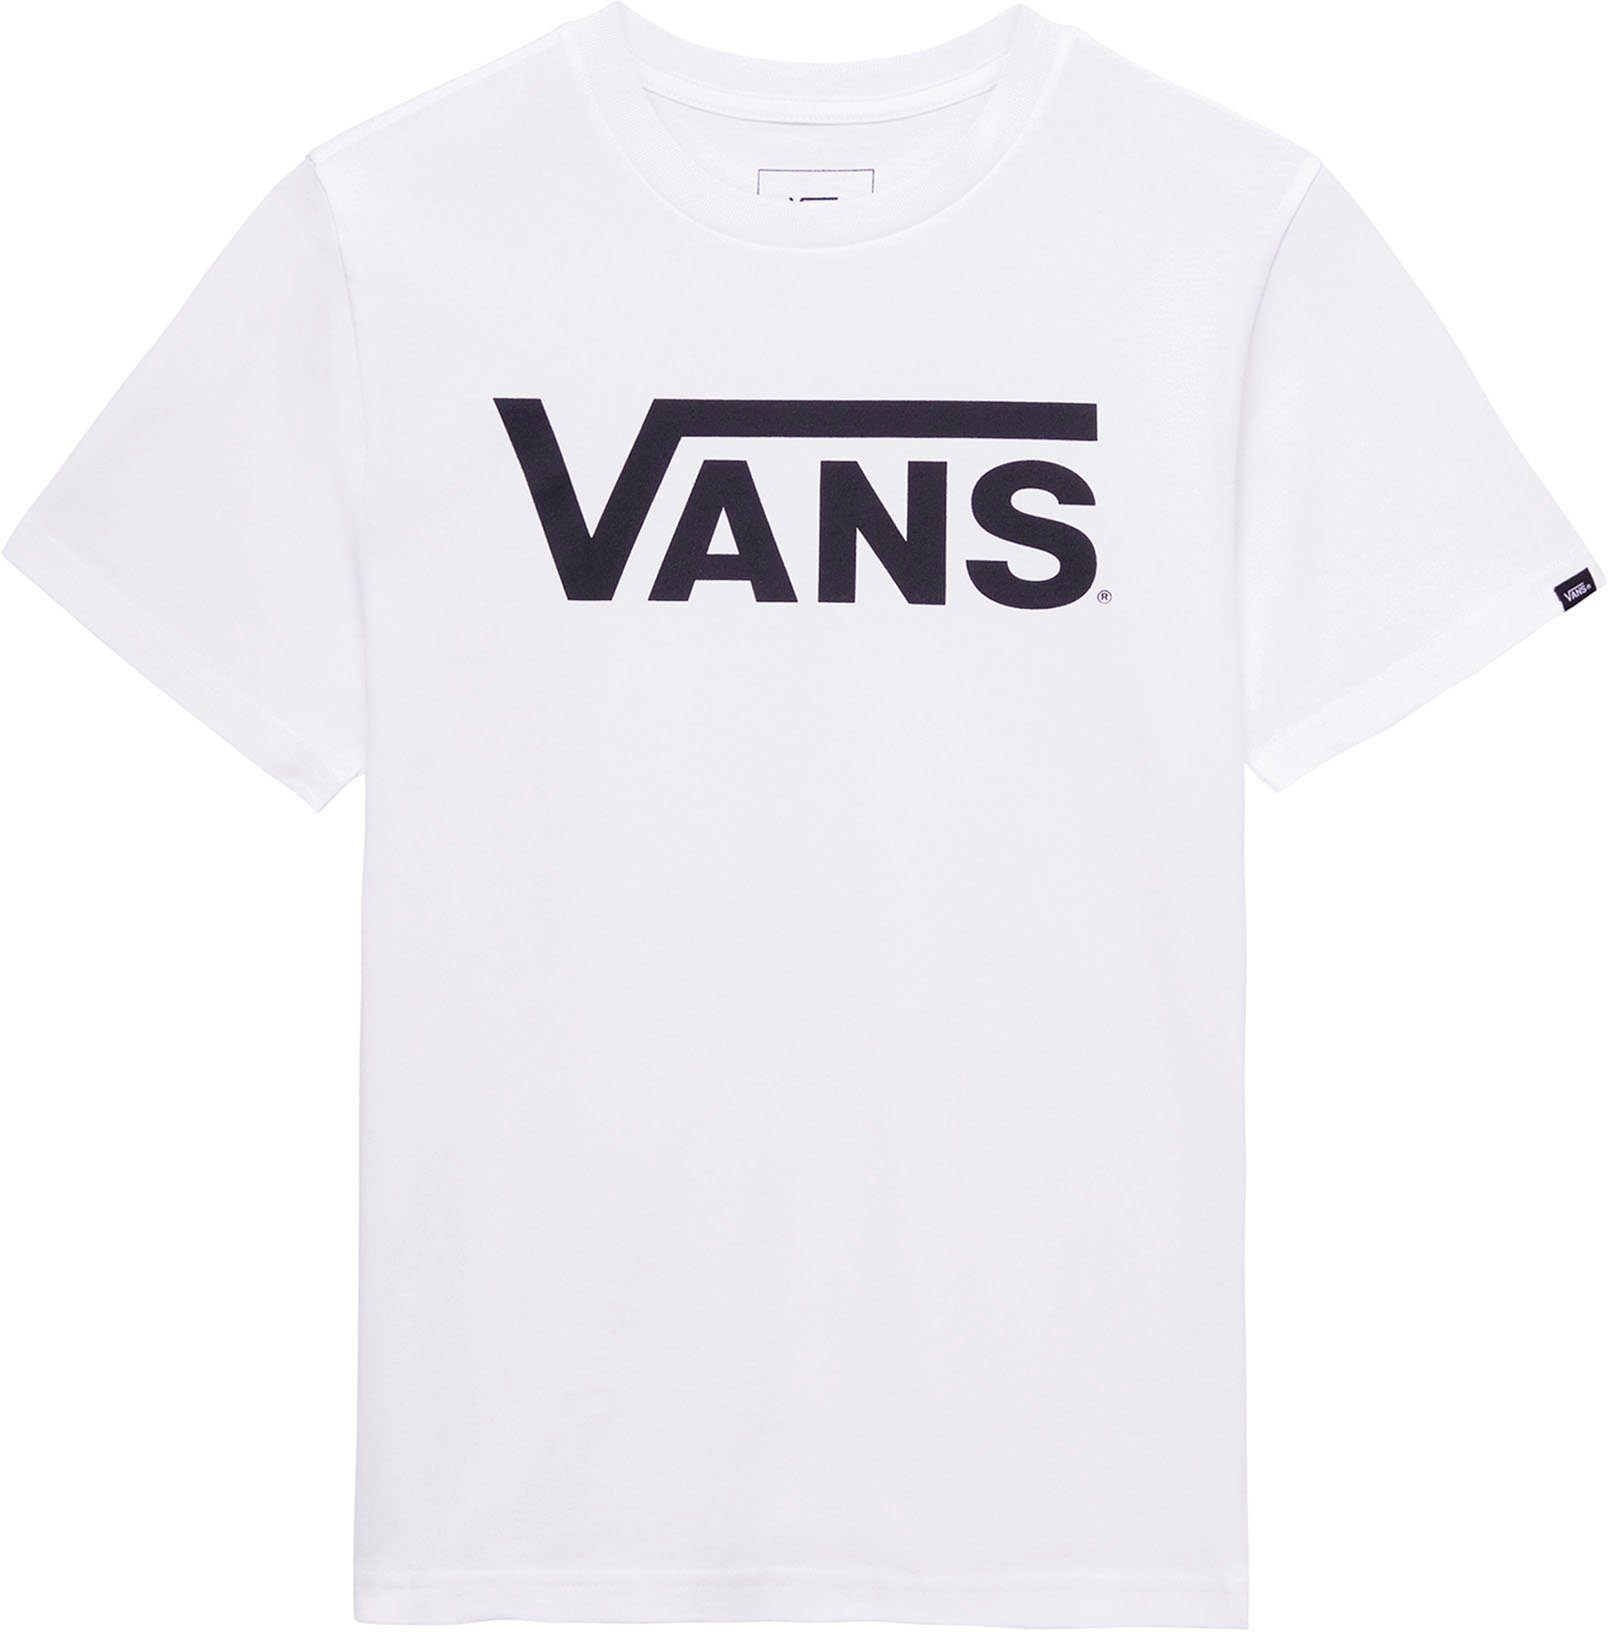 CLASSIC Vans T-Shirt VANS weiß BOYS